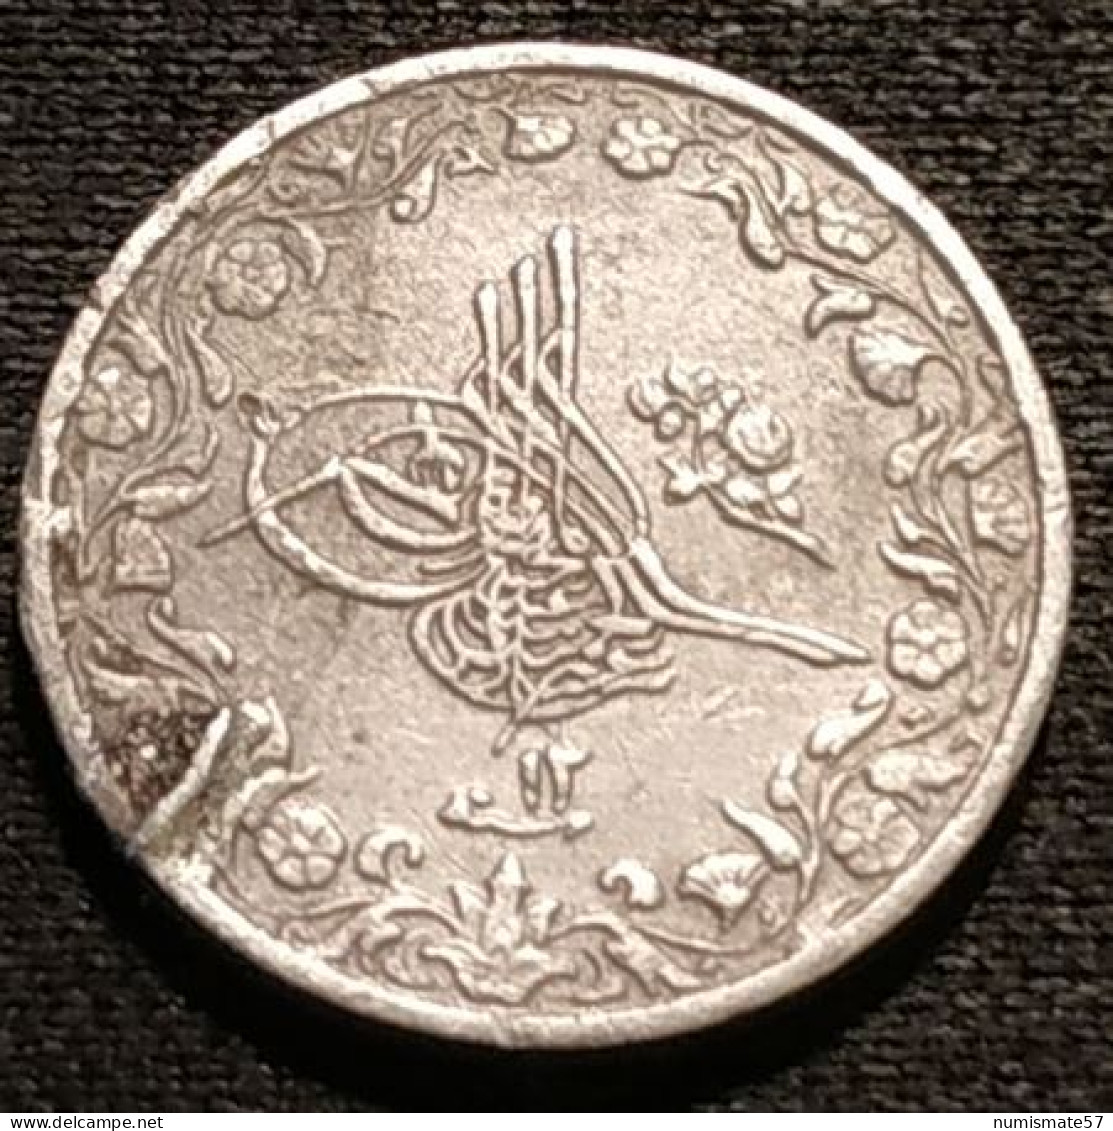 EGYPTE - EGYPT - 1/10 QIRSH 1886 ( 1293 - 12 ) - KM 289 - ( Abdul Hamid II ) - Egipto